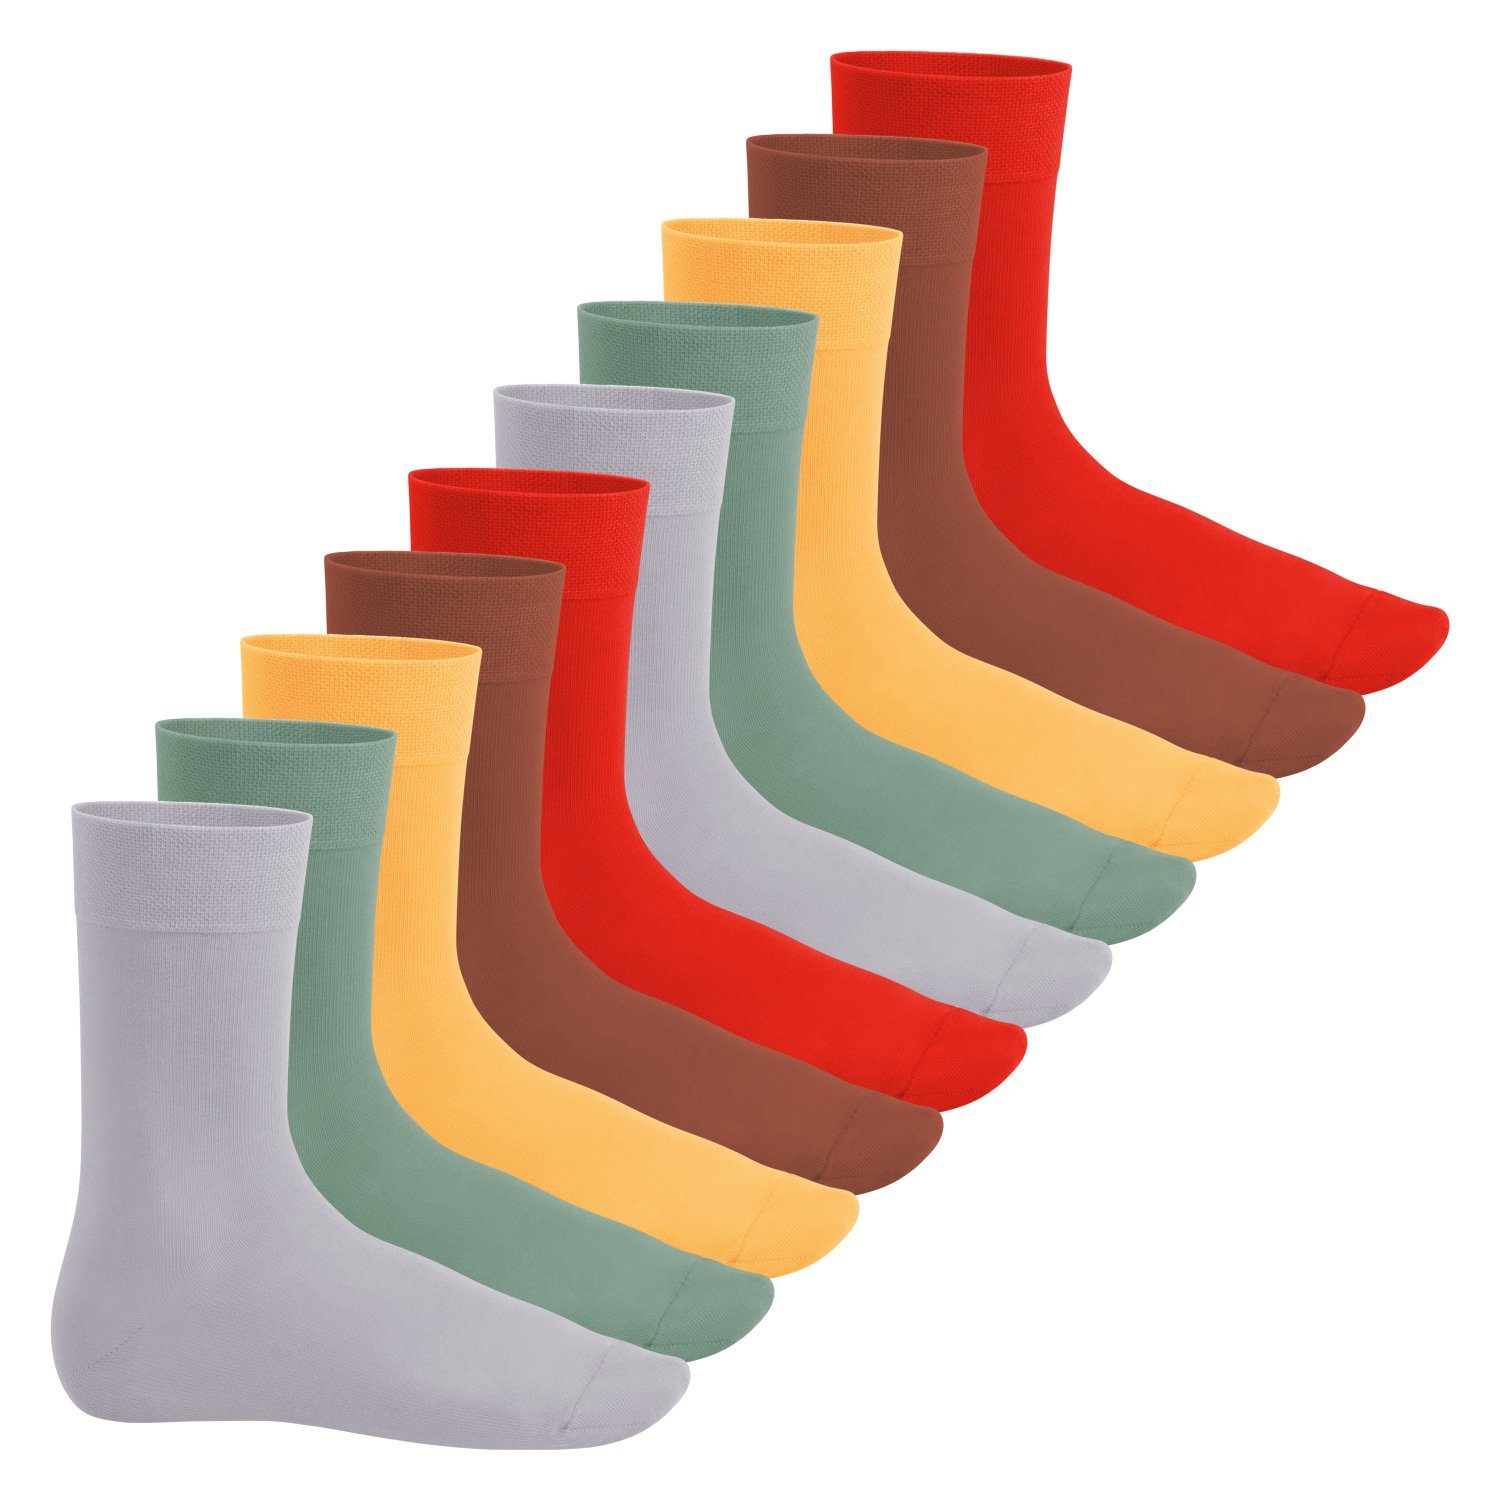 Footstar Basicsocken Everyday! Herren & Damen Socken (10 Paar) mit Baumwolle Urban Camouflage | Socken